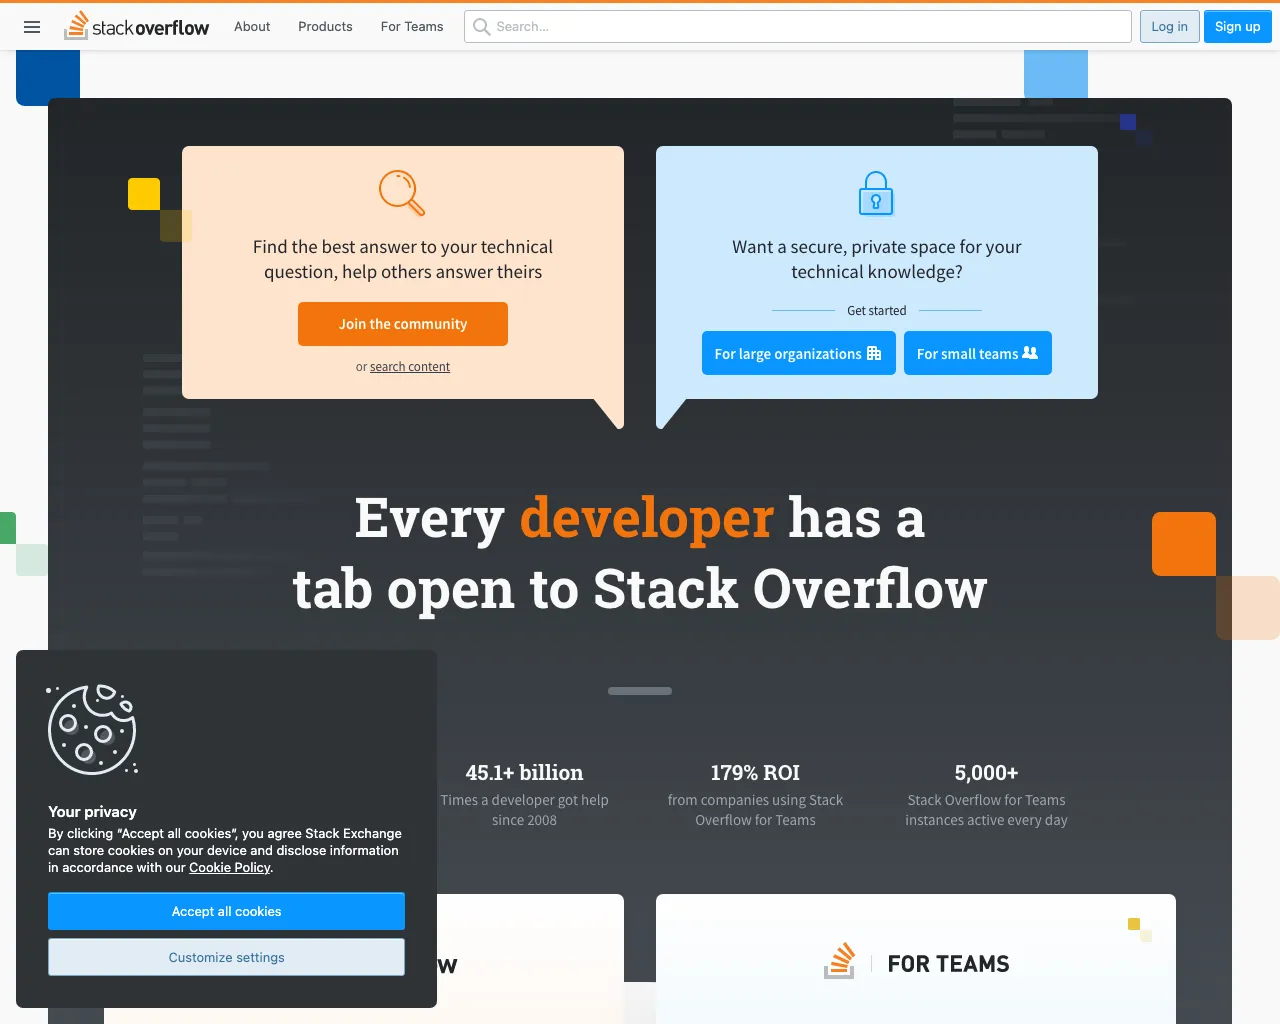 A screenshot of the StackOverflow site taken by screenshot
API